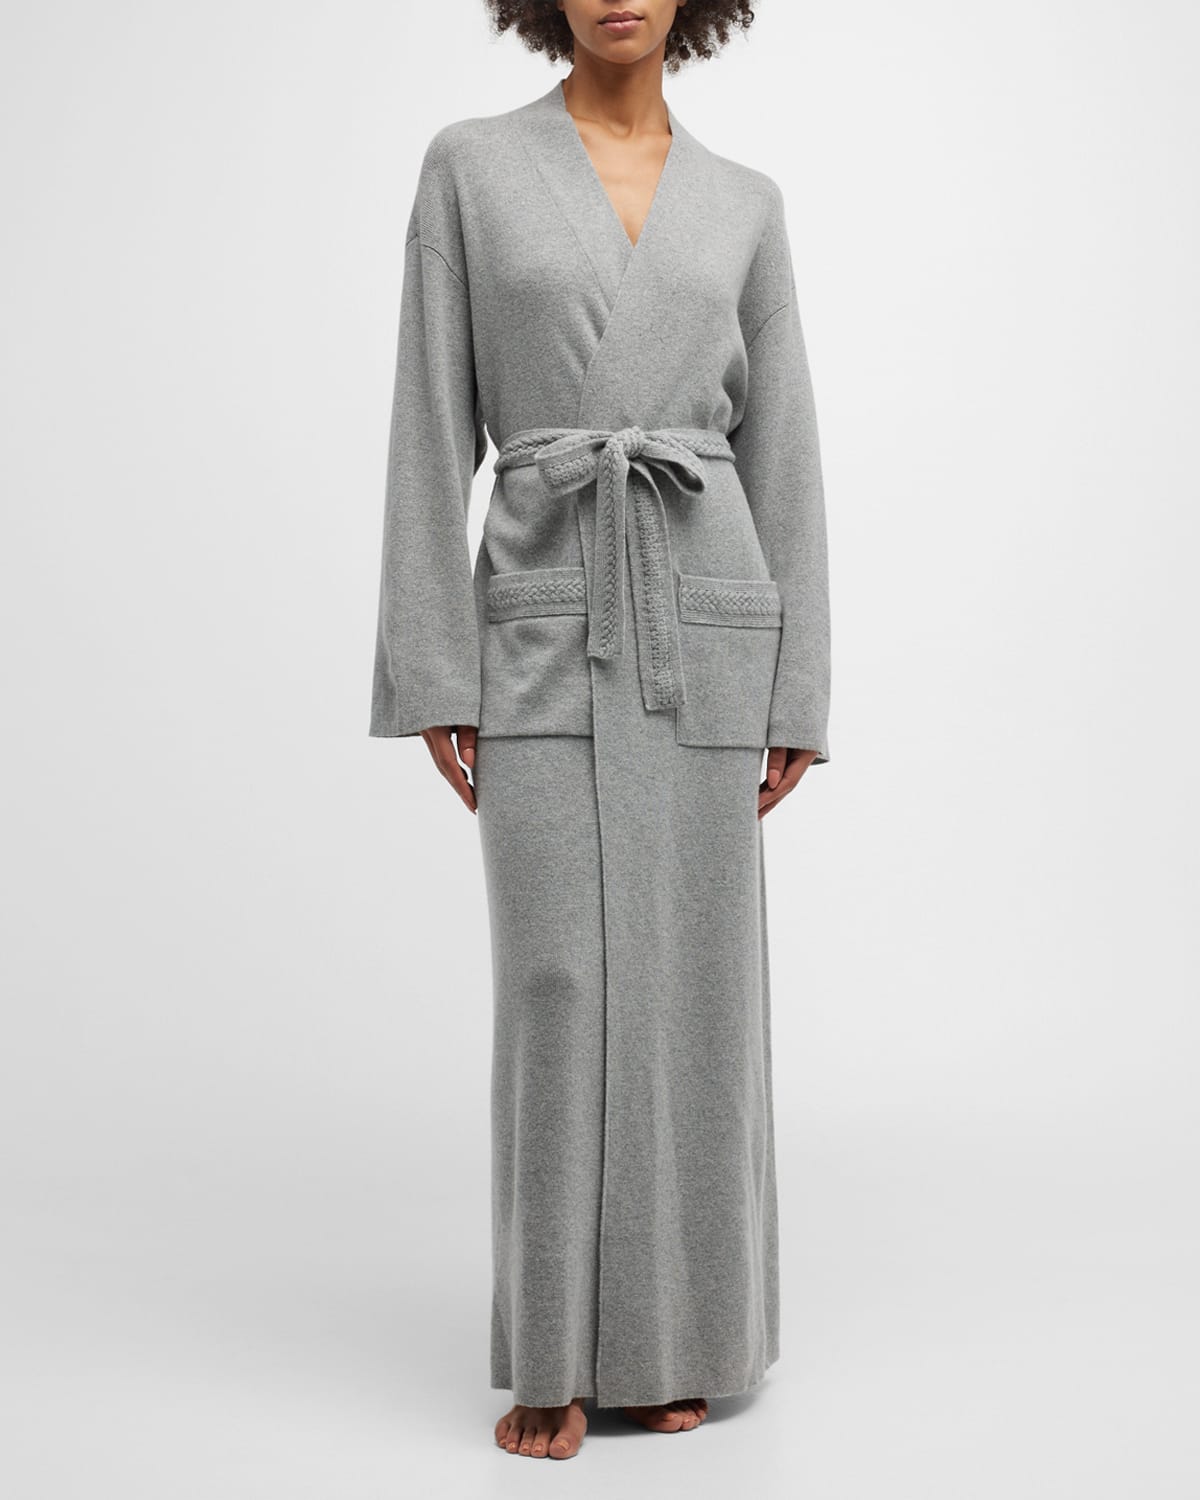 Braided Jewel Wool-Cashmere Robe